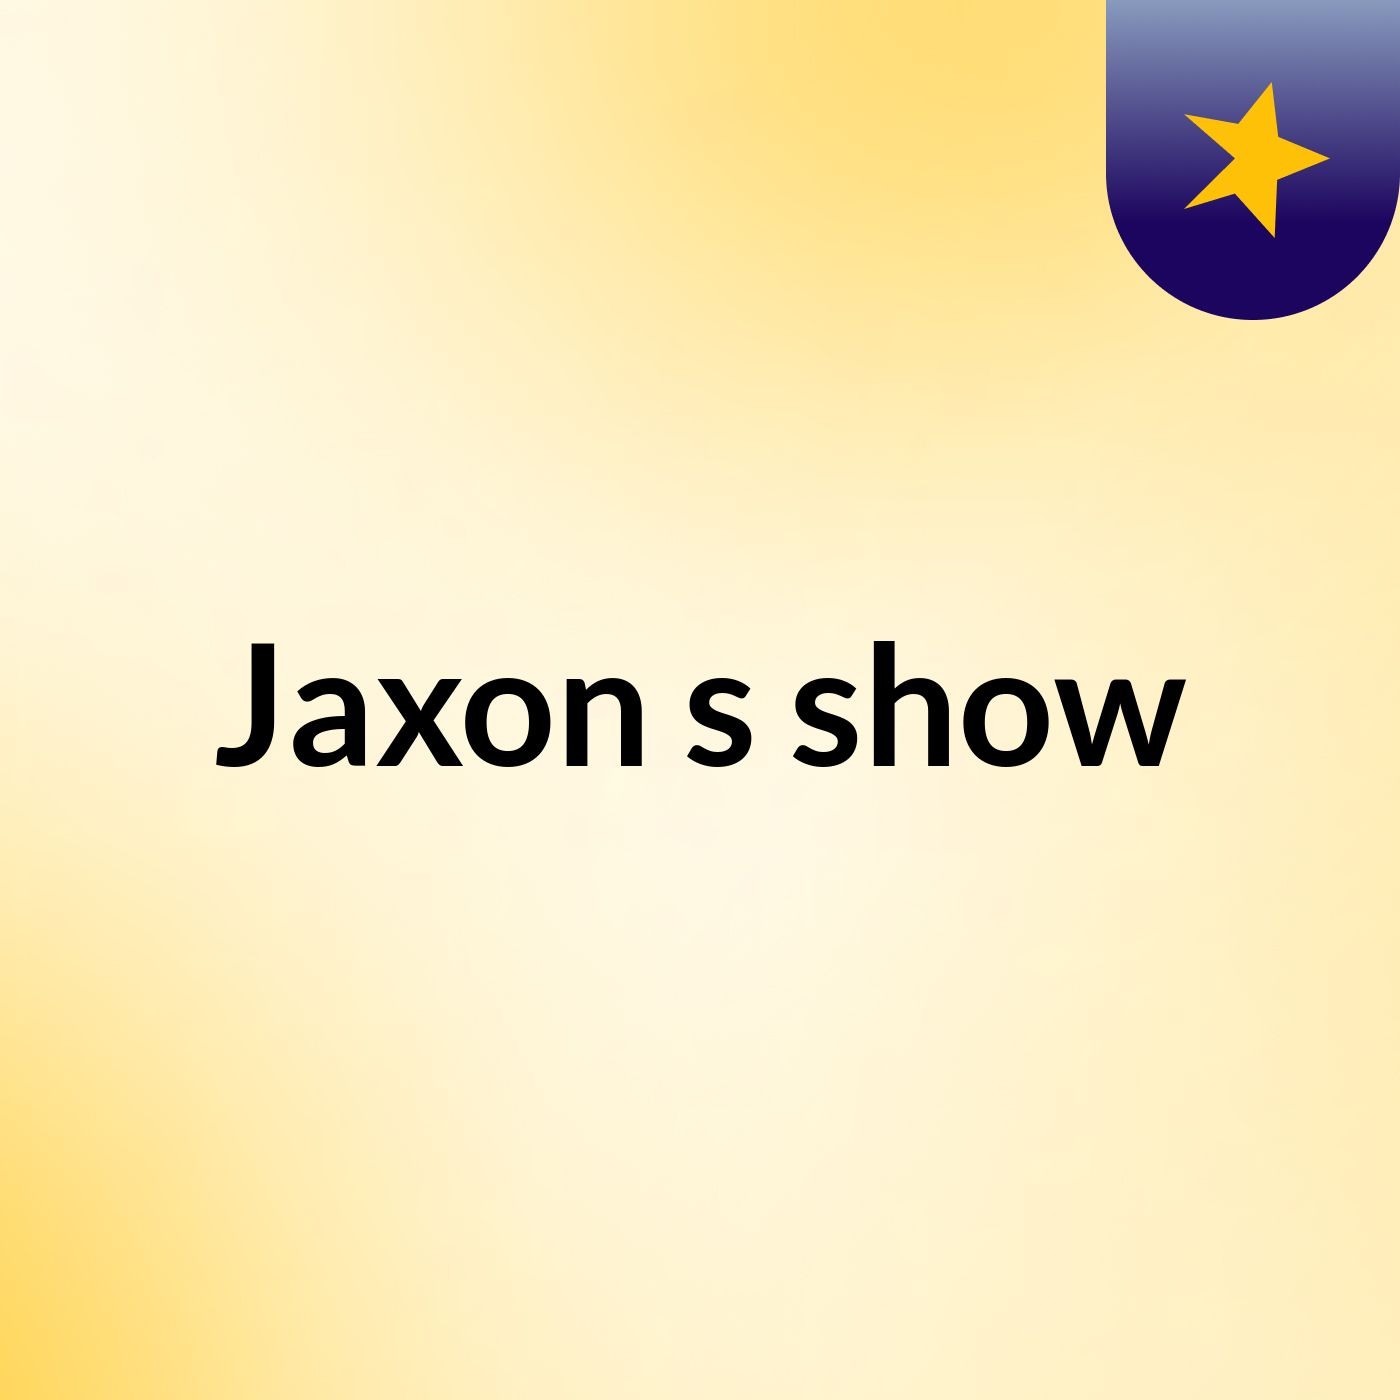 Jaxon's show